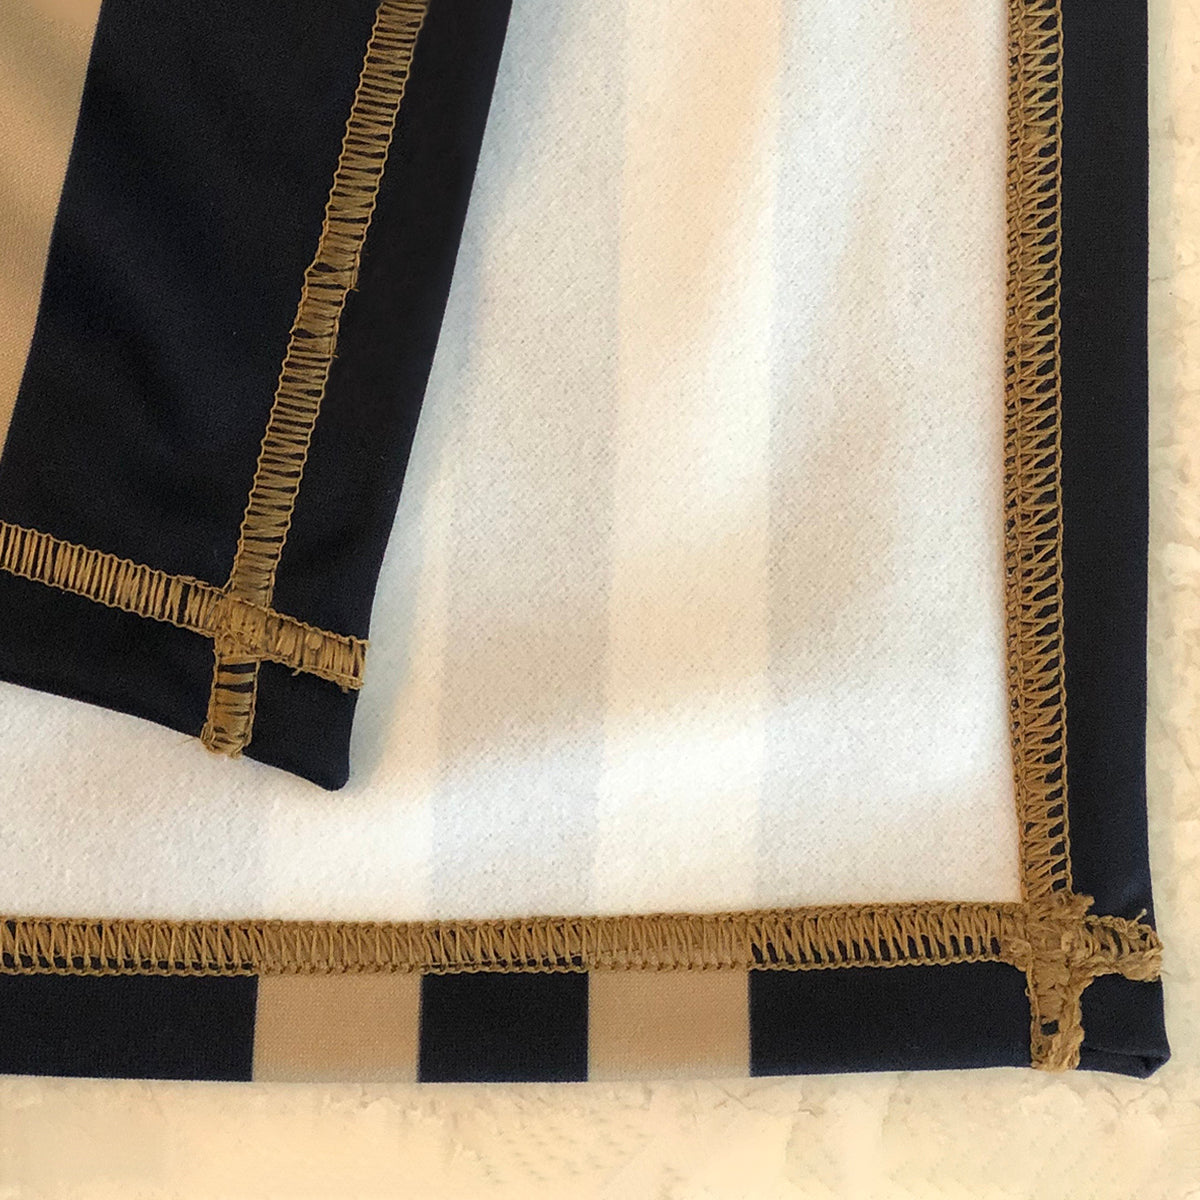 Colorado College Tigers Game Day Soft Premium Fleece Black Throw Blanket 40 x 58 Logo and Stripes